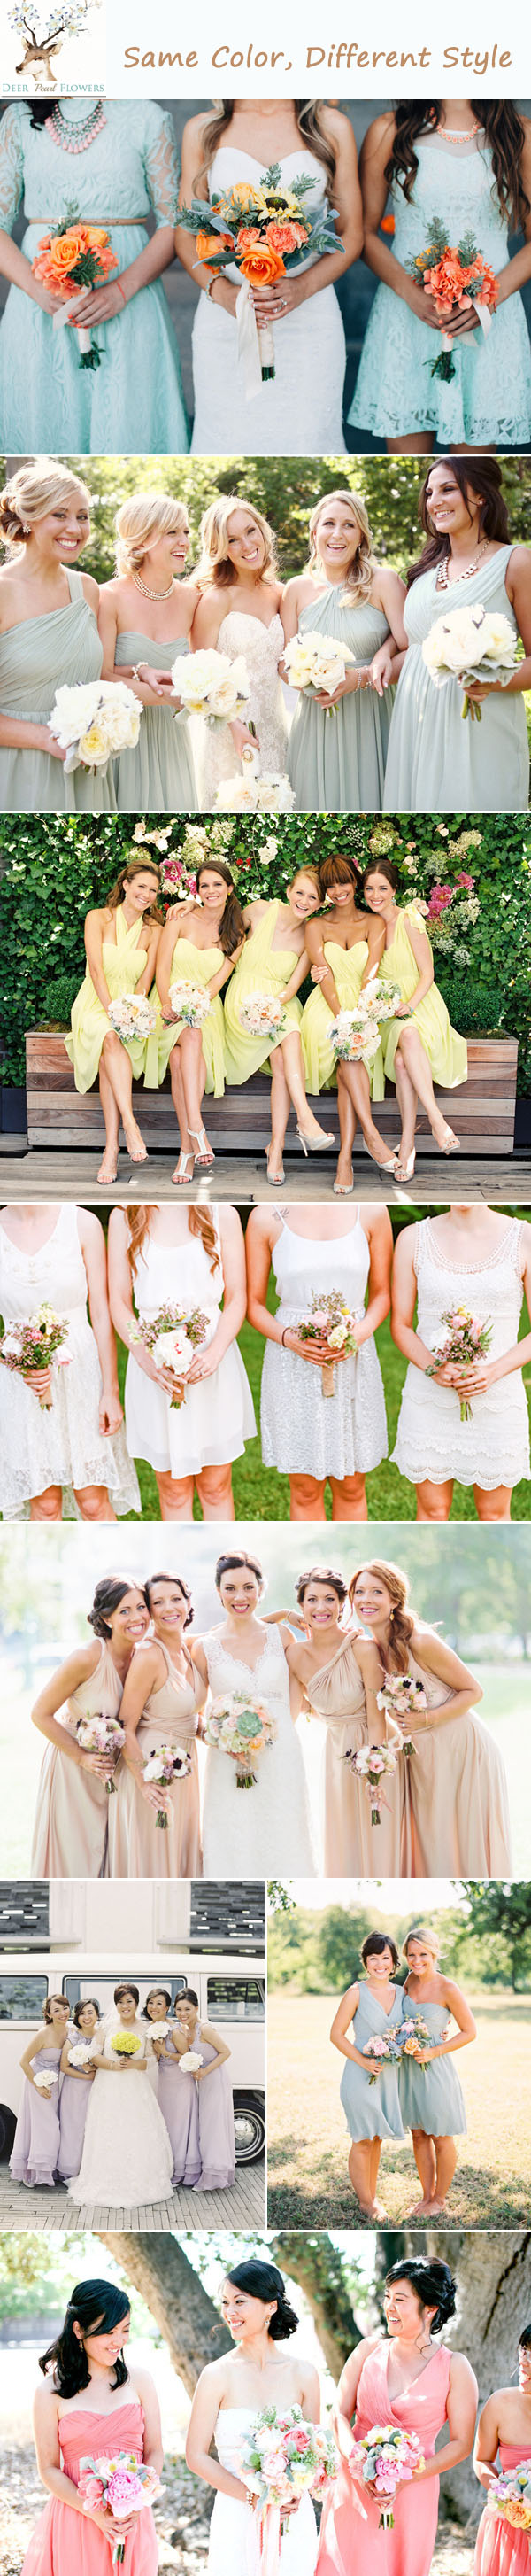 mismatched bridesmaid dresses-same color different style